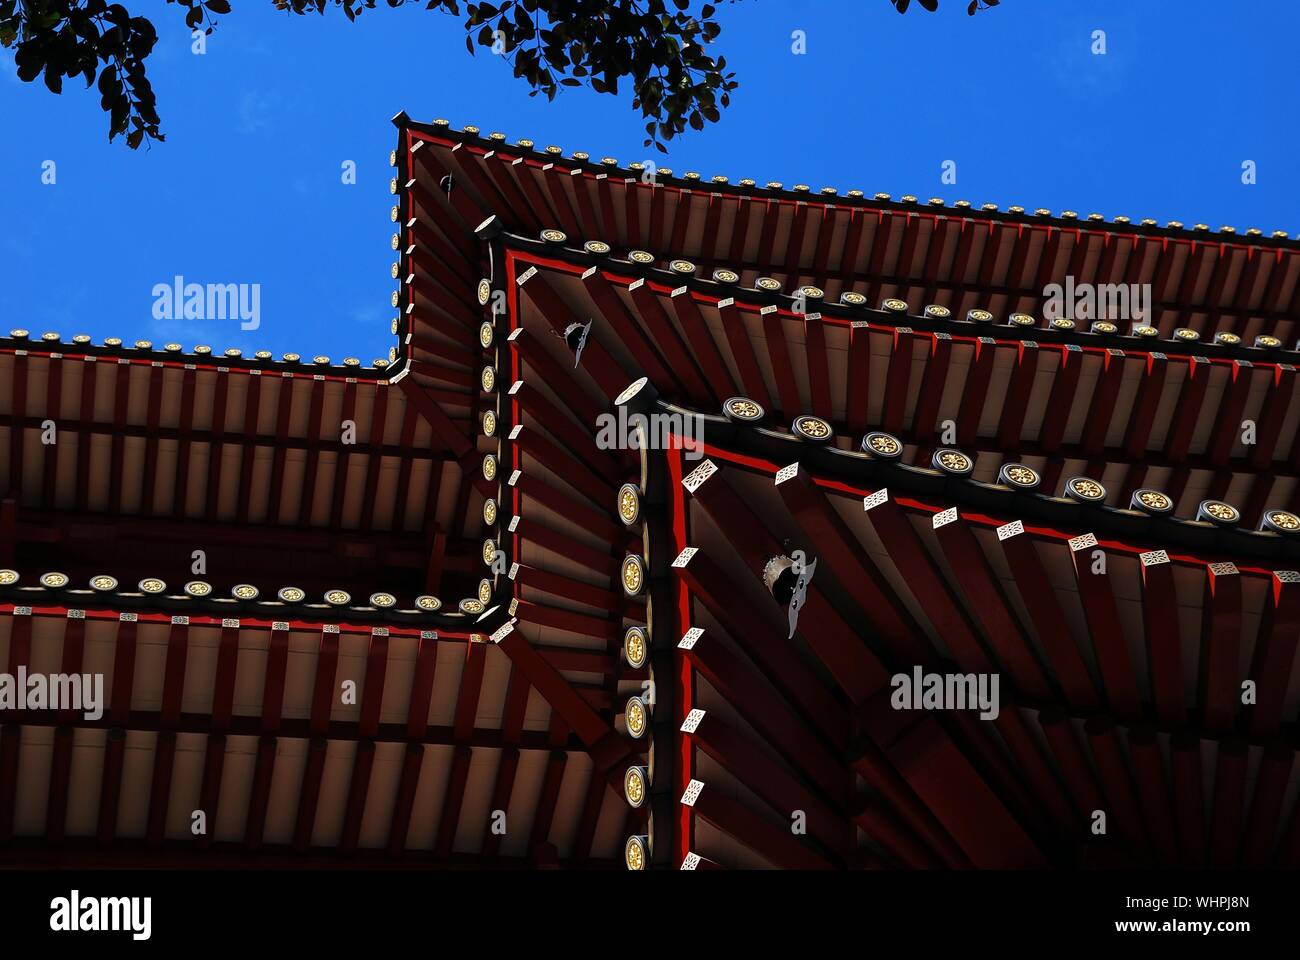 Niedrigen Winkel Blick auf Bauwerke gegen blauen Himmel Stockfoto